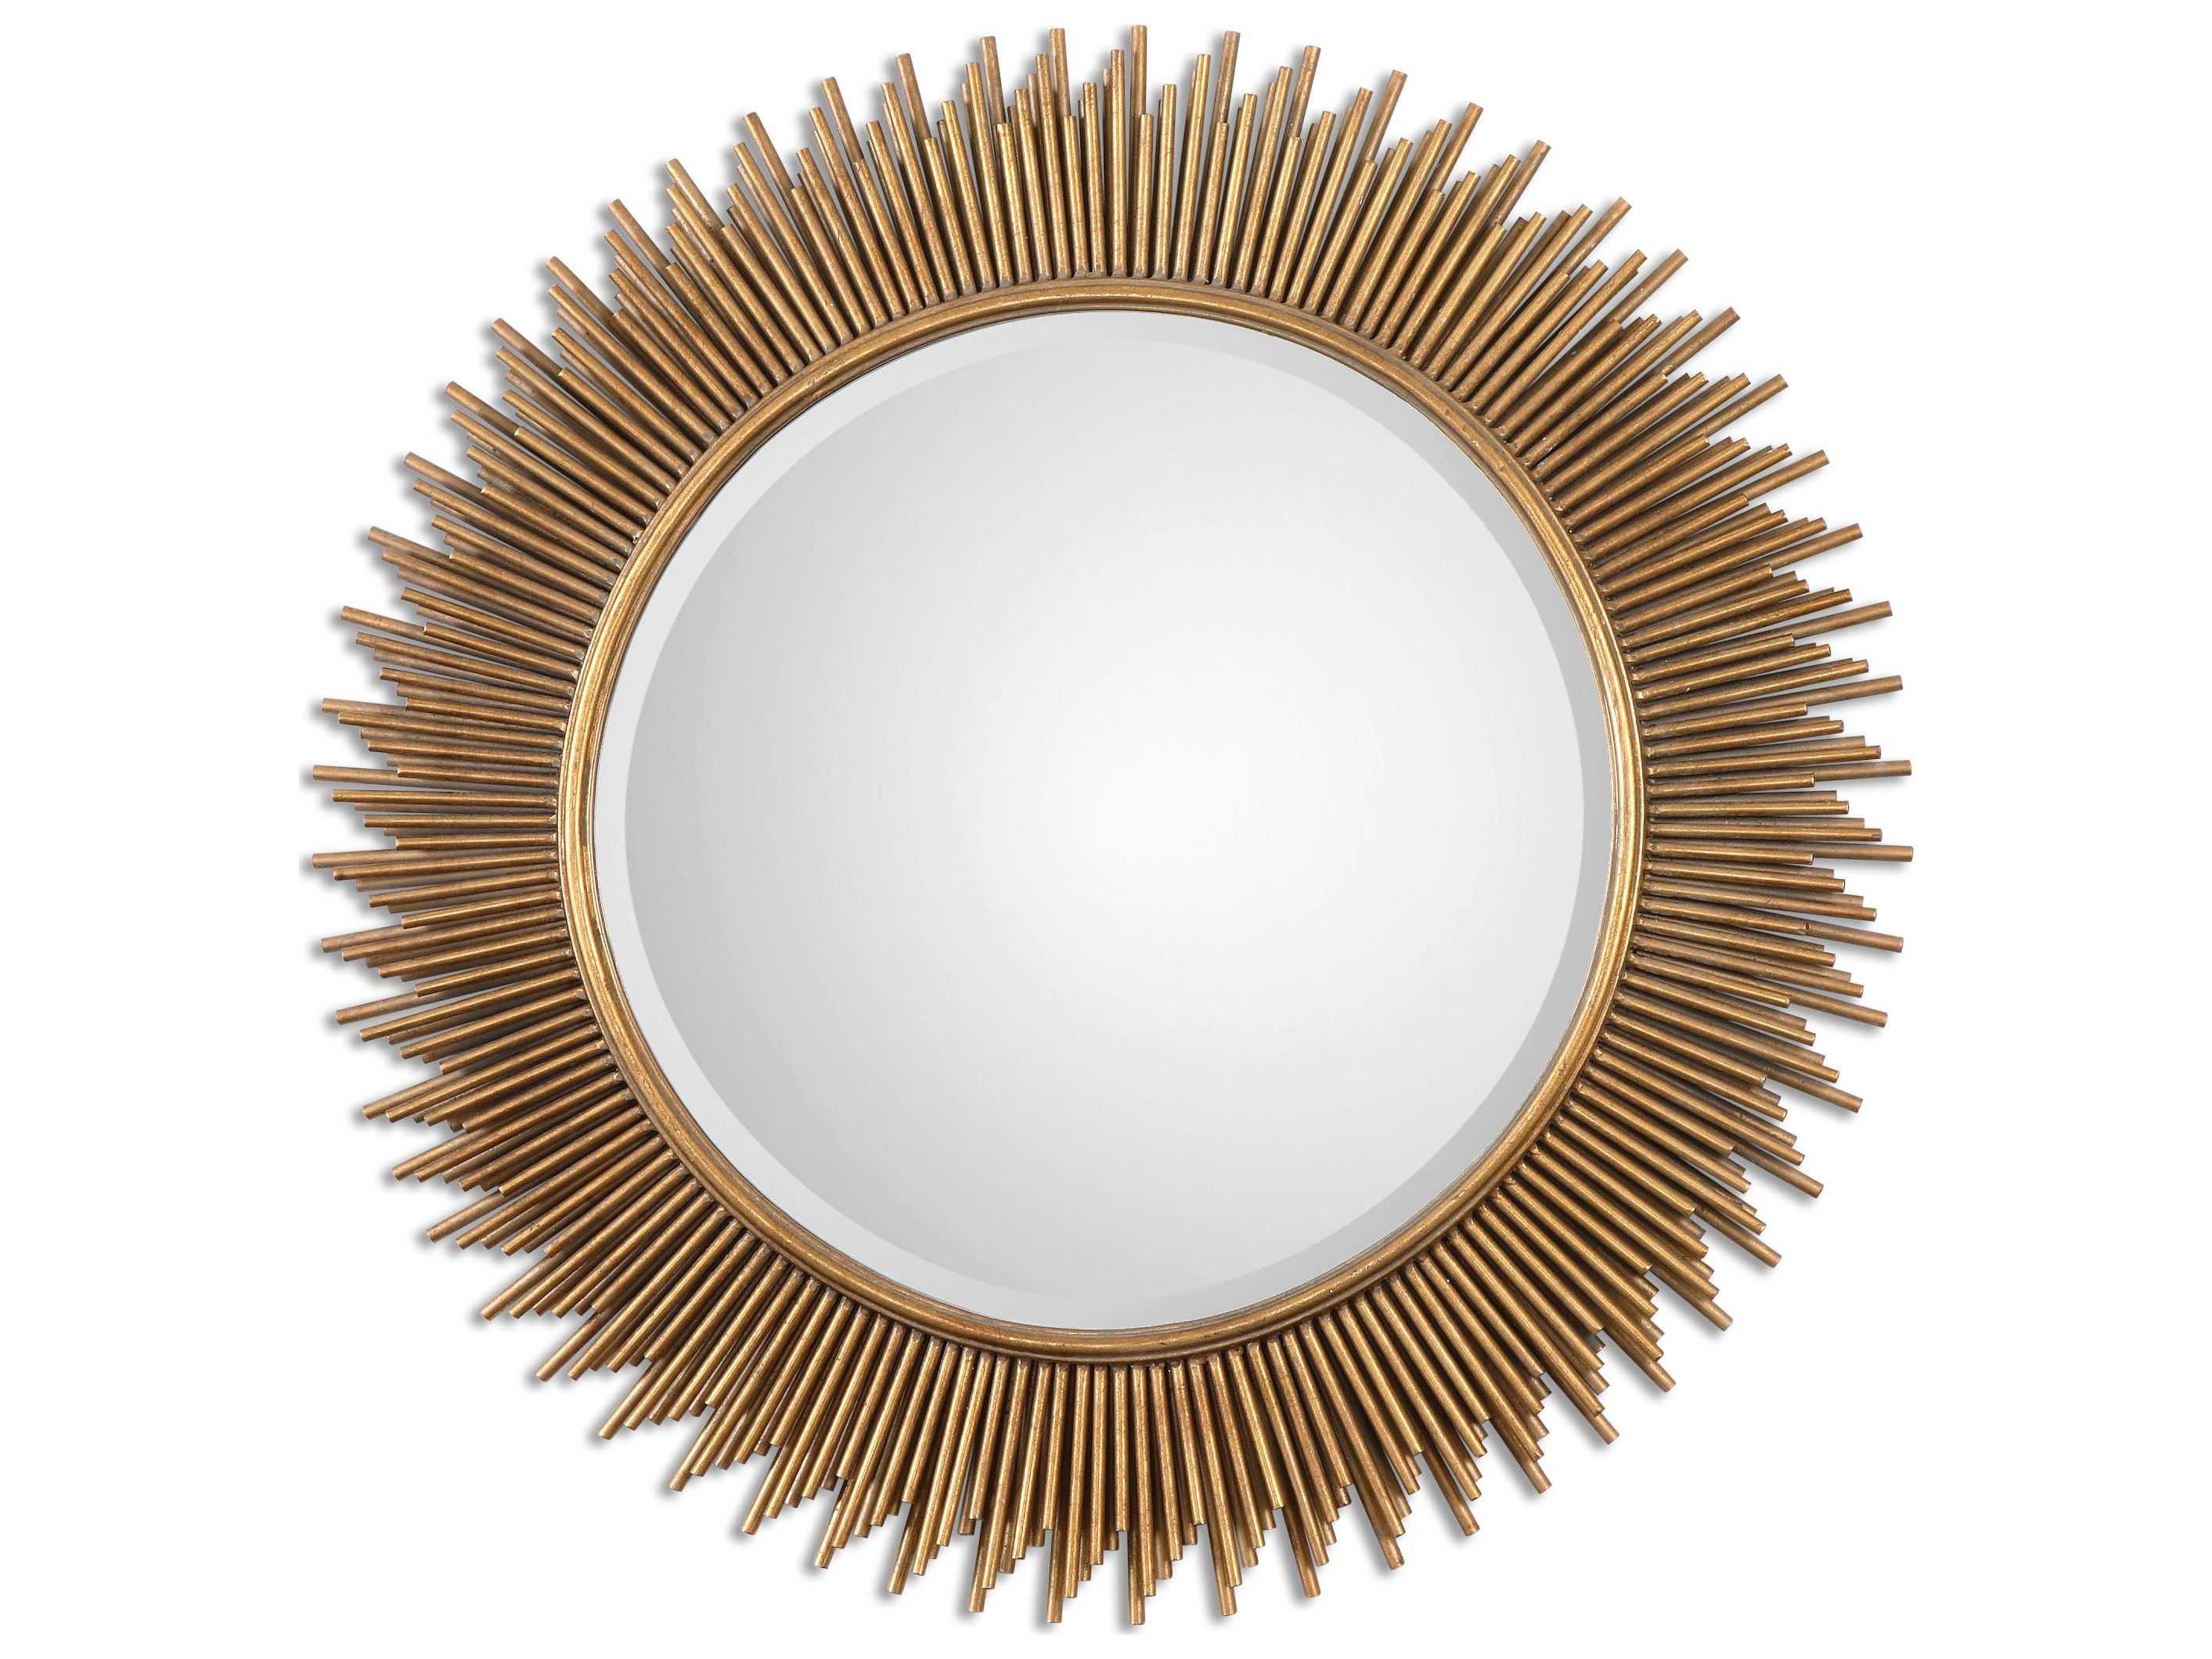 Uttermost Marlo 36 Round Gold Wall, Uttermost Round Wall Mirrors